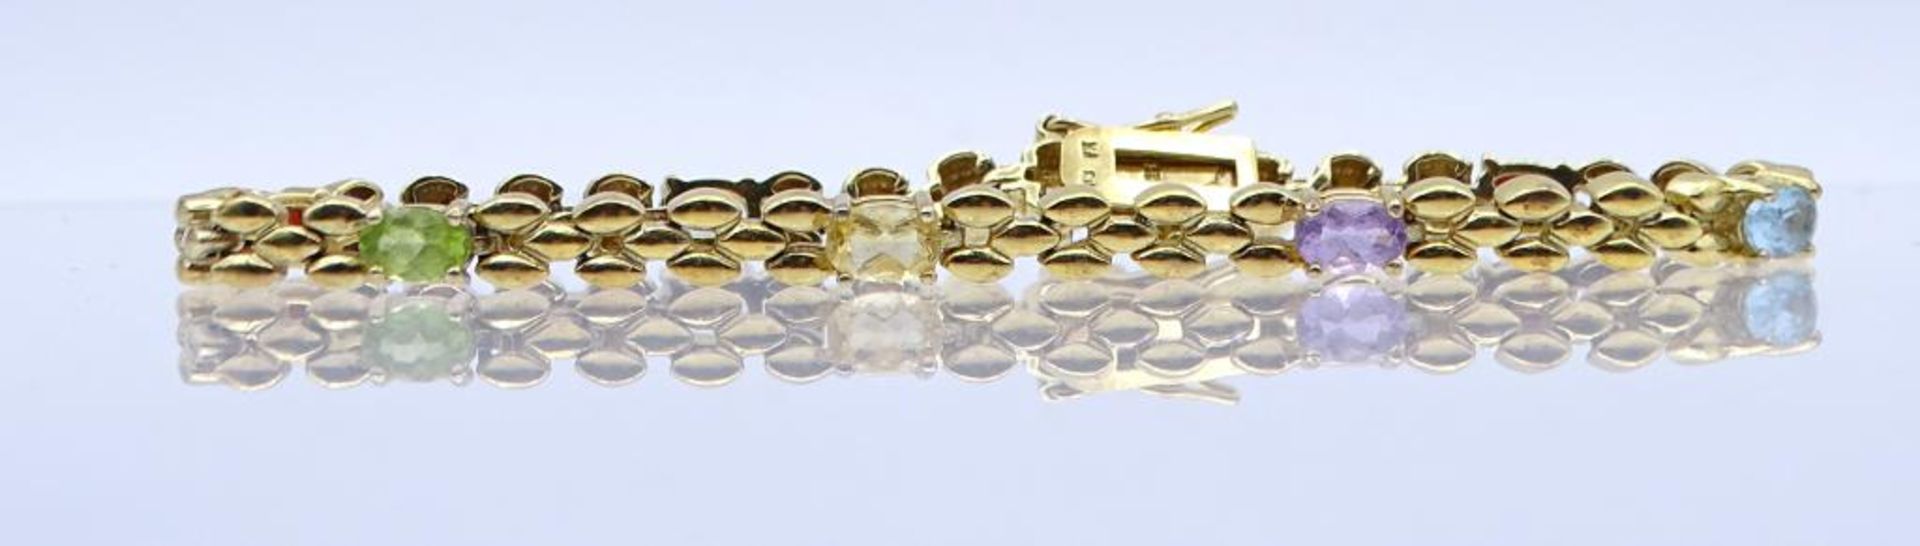 Sterling Silber Armband mit Halbedelsteinen,Silber 925/000, Silber-vergoldet, Peridot,Amethyst,